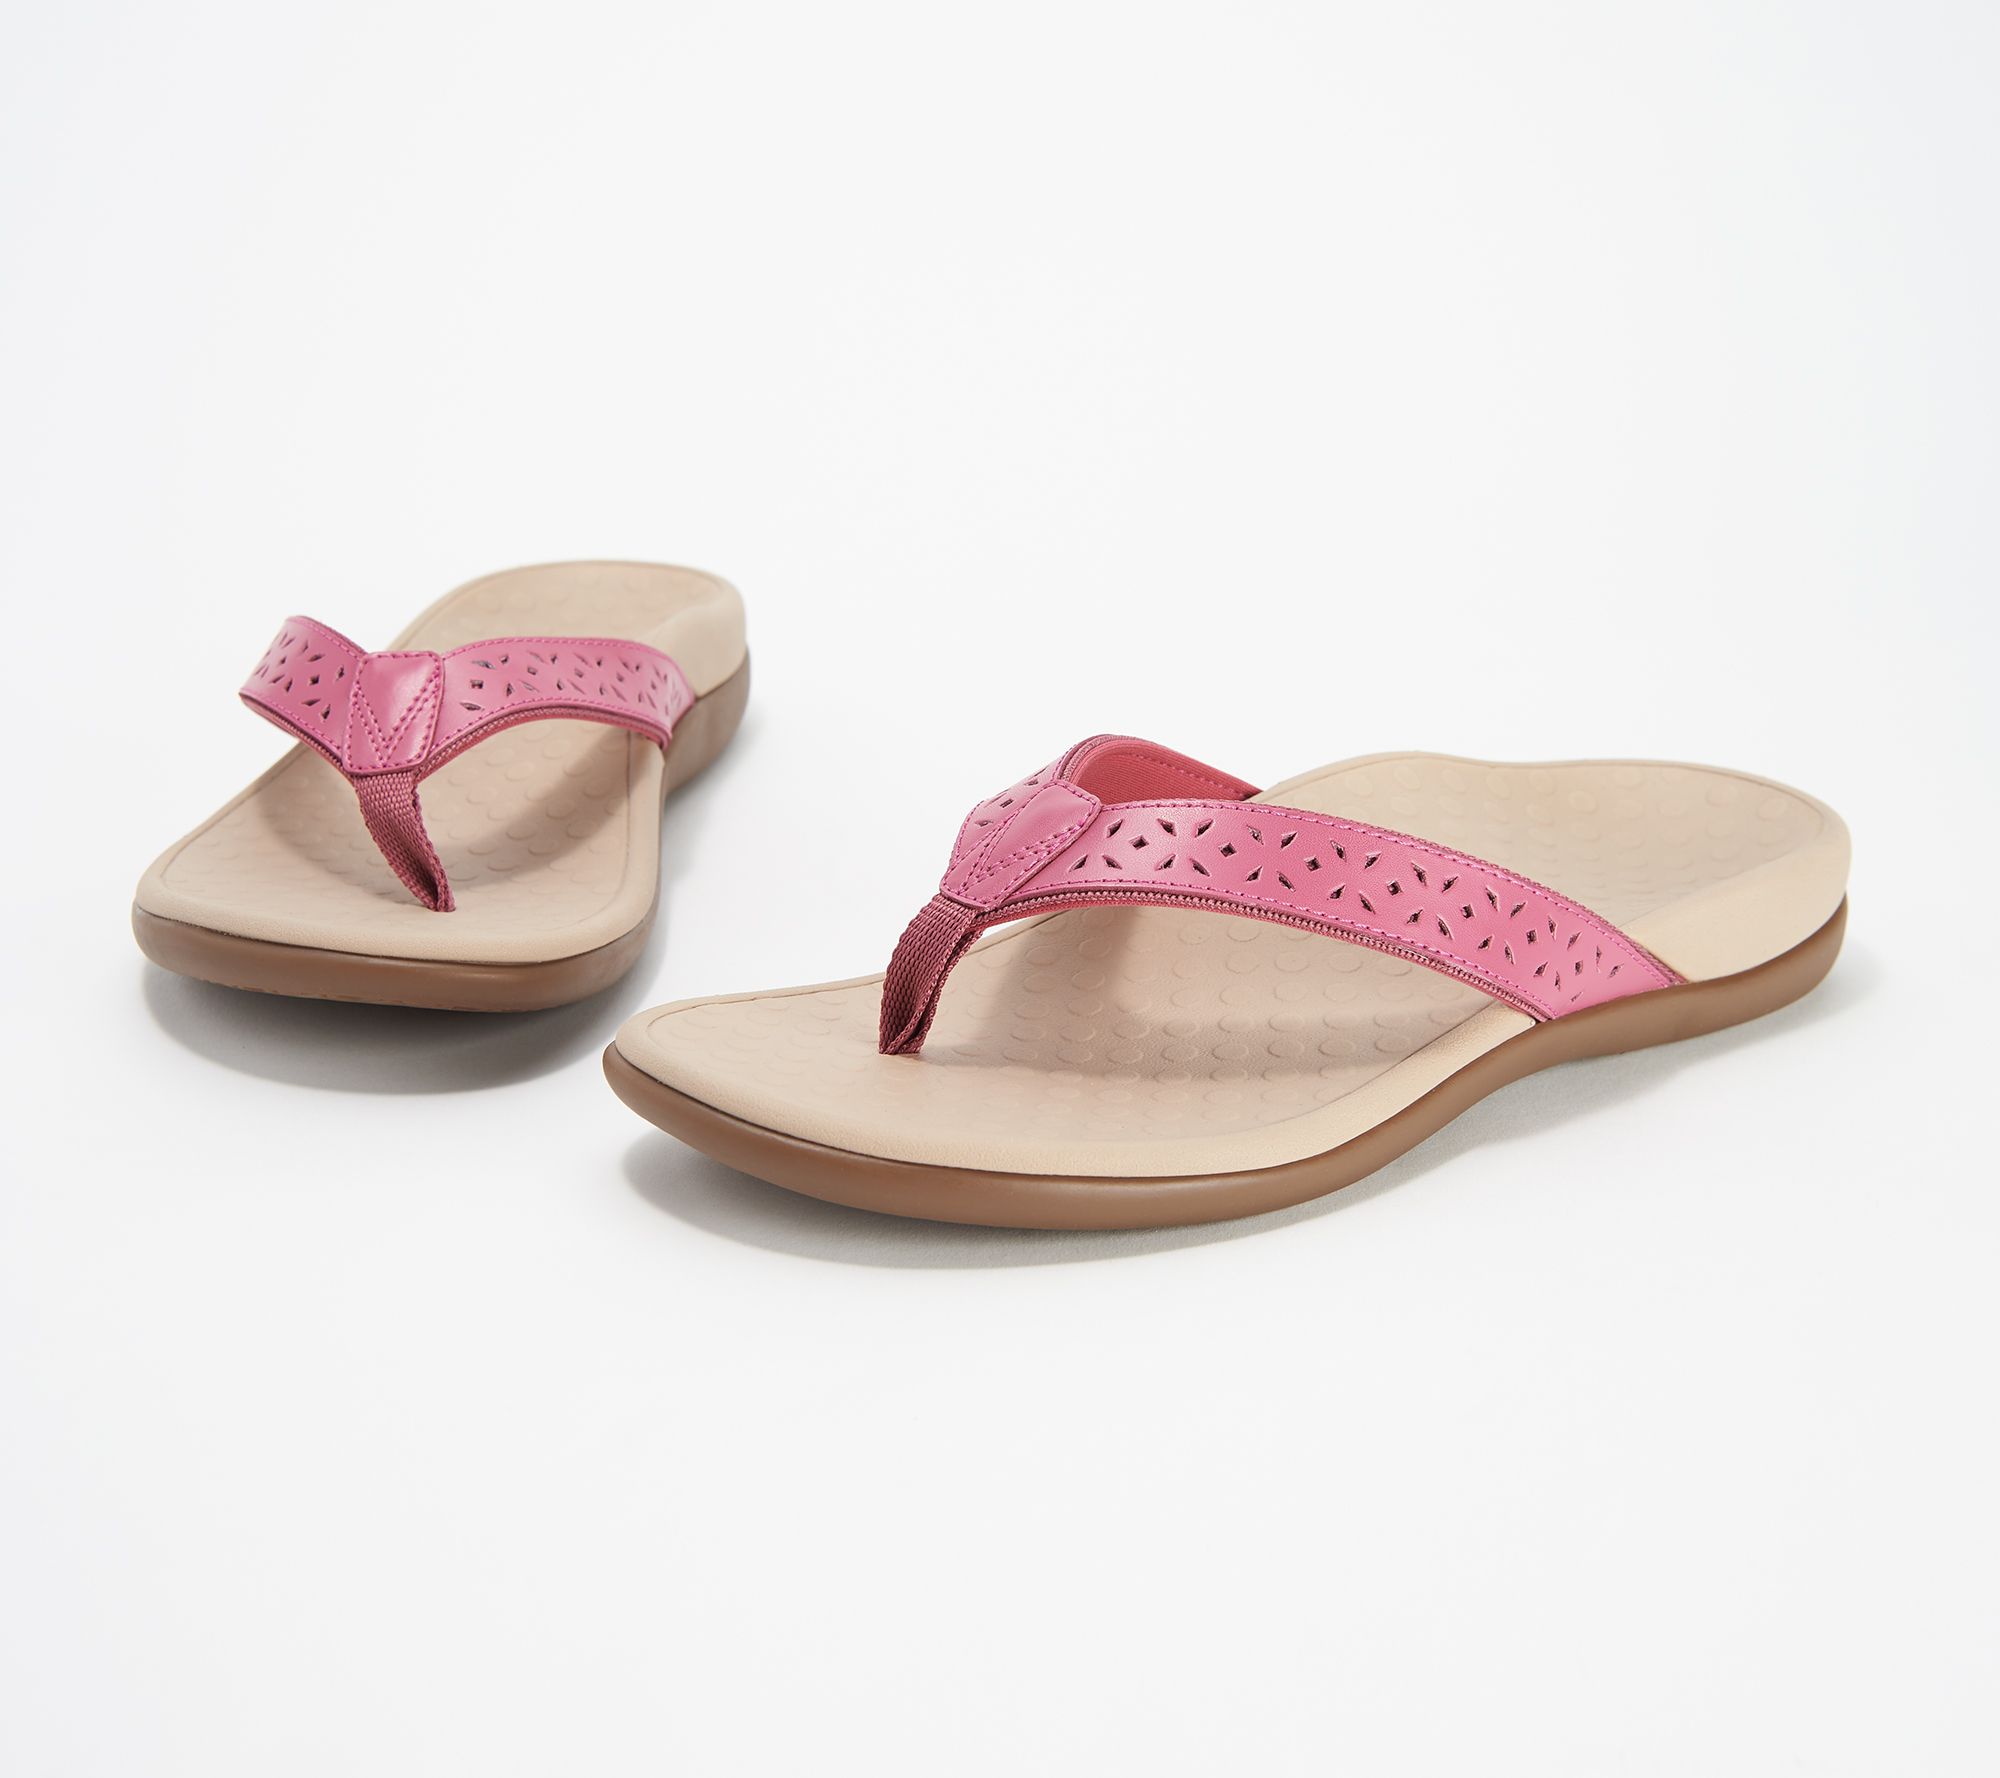 qvc vionic sandals on sale